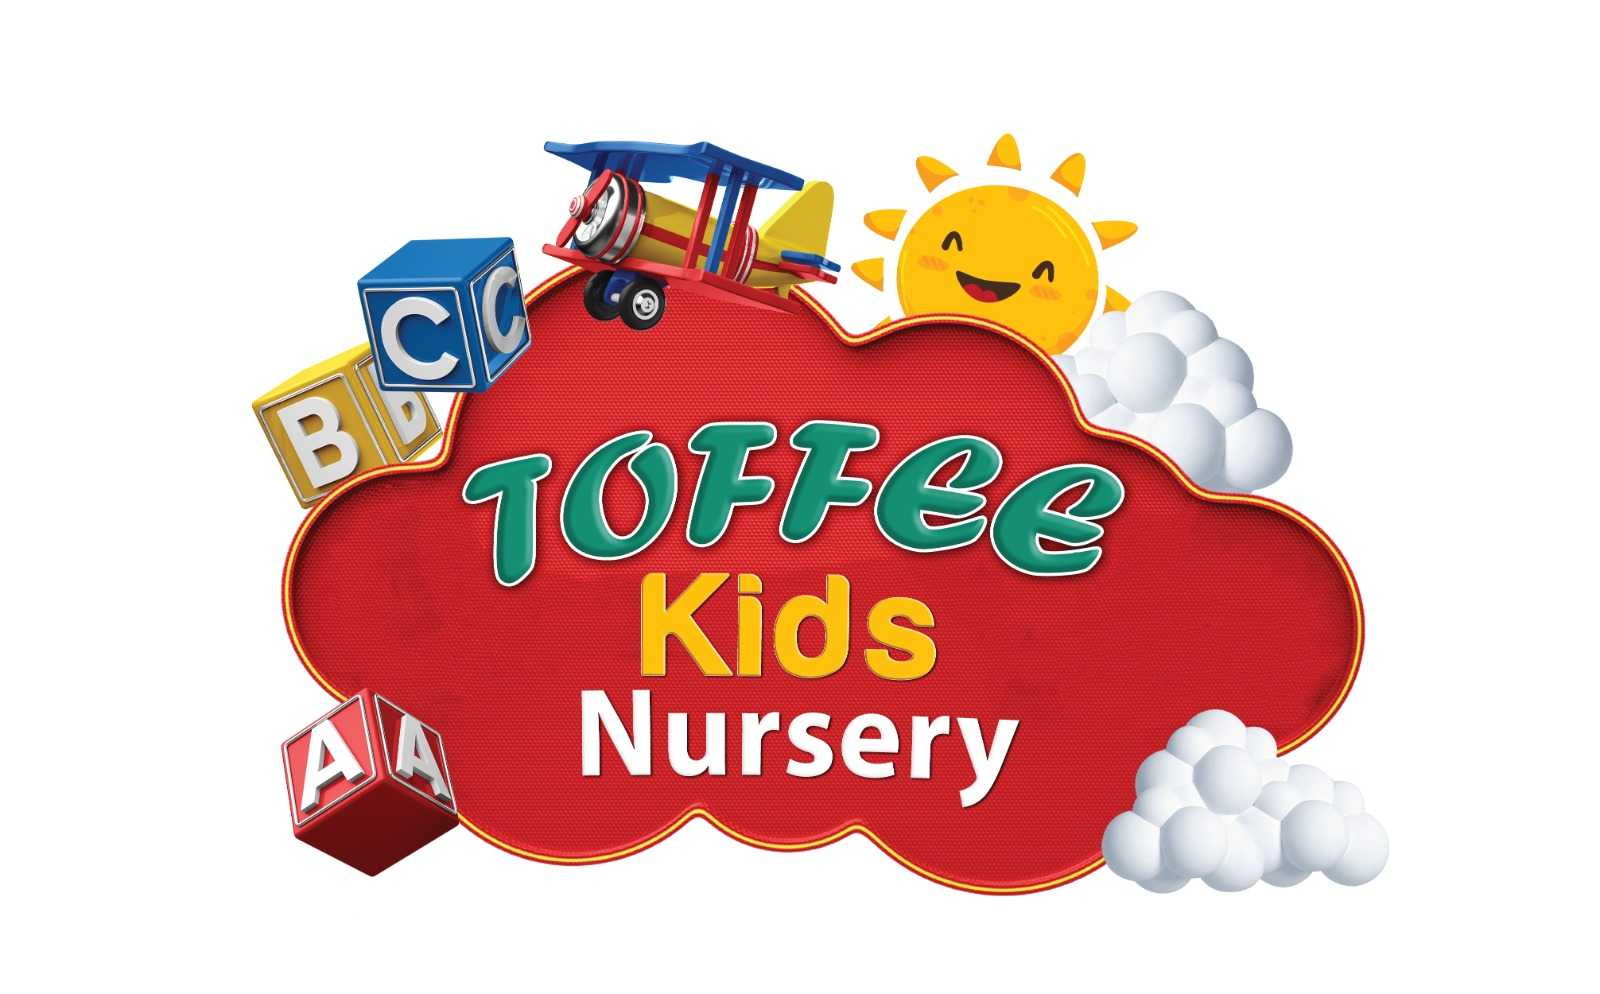 Toffee kids.Nursery